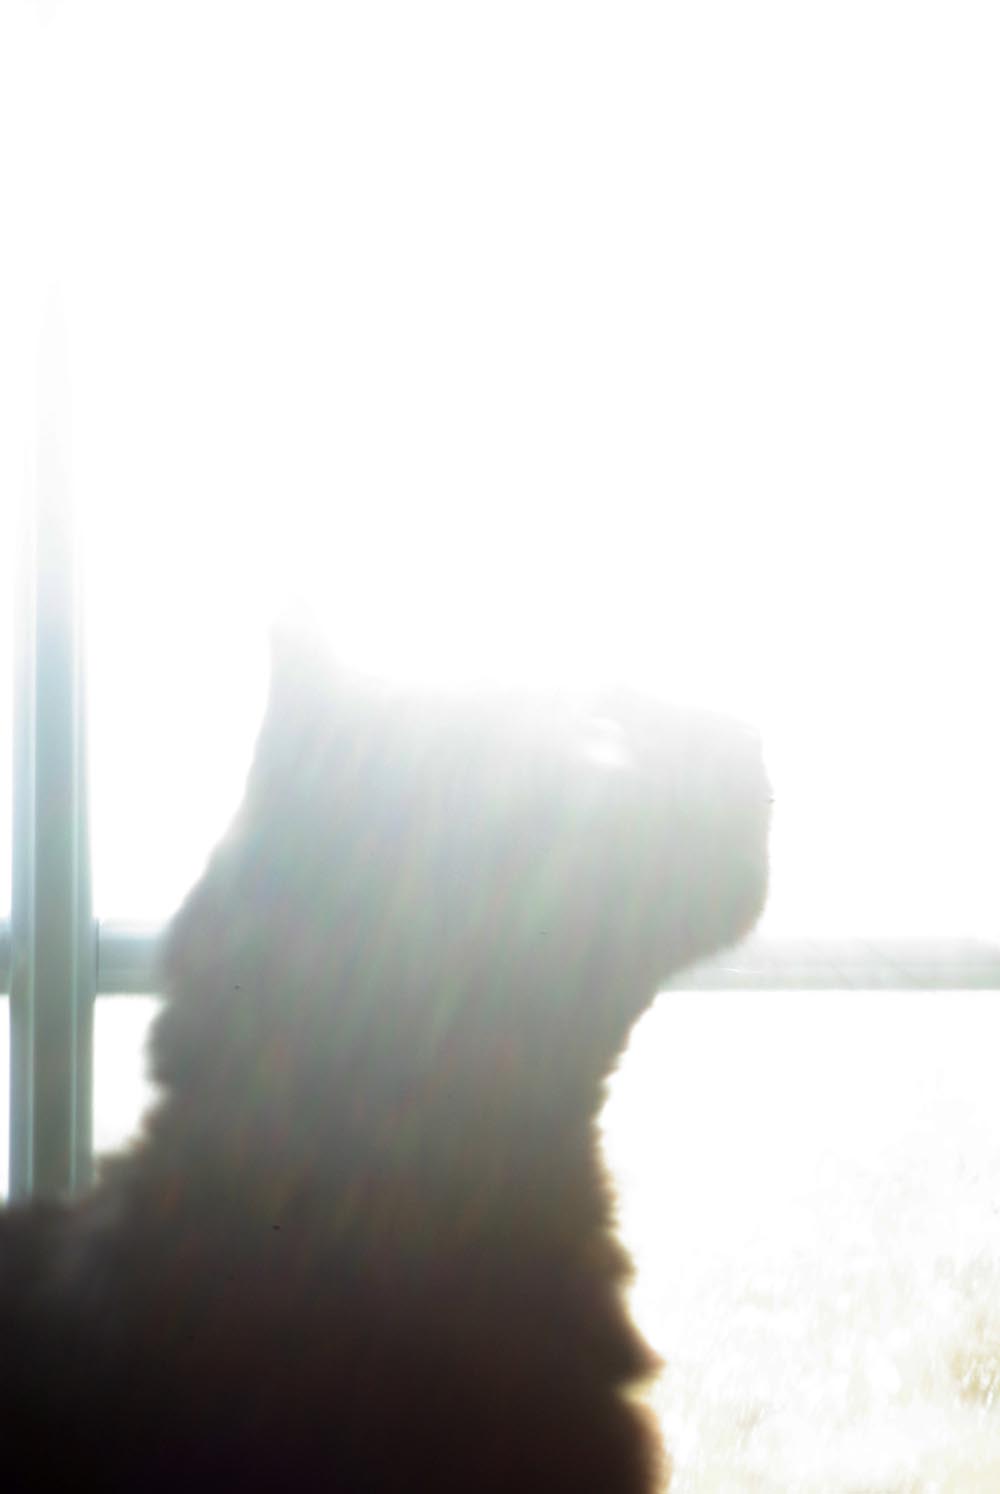 cat by sunny window